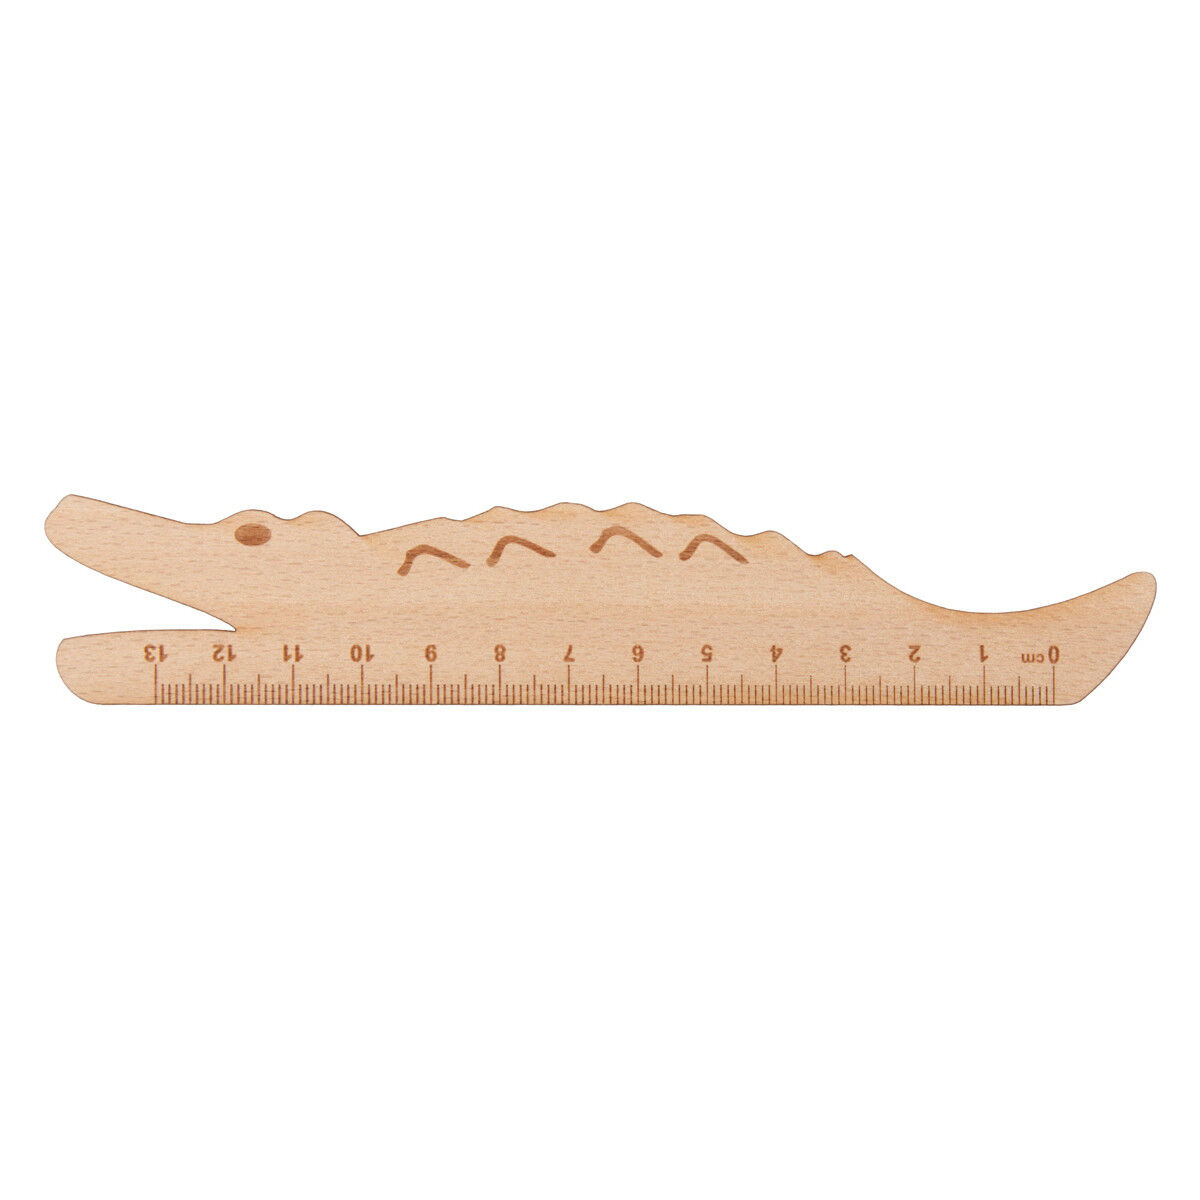 Fun-shaped wooden ruler for kids (crocodile)